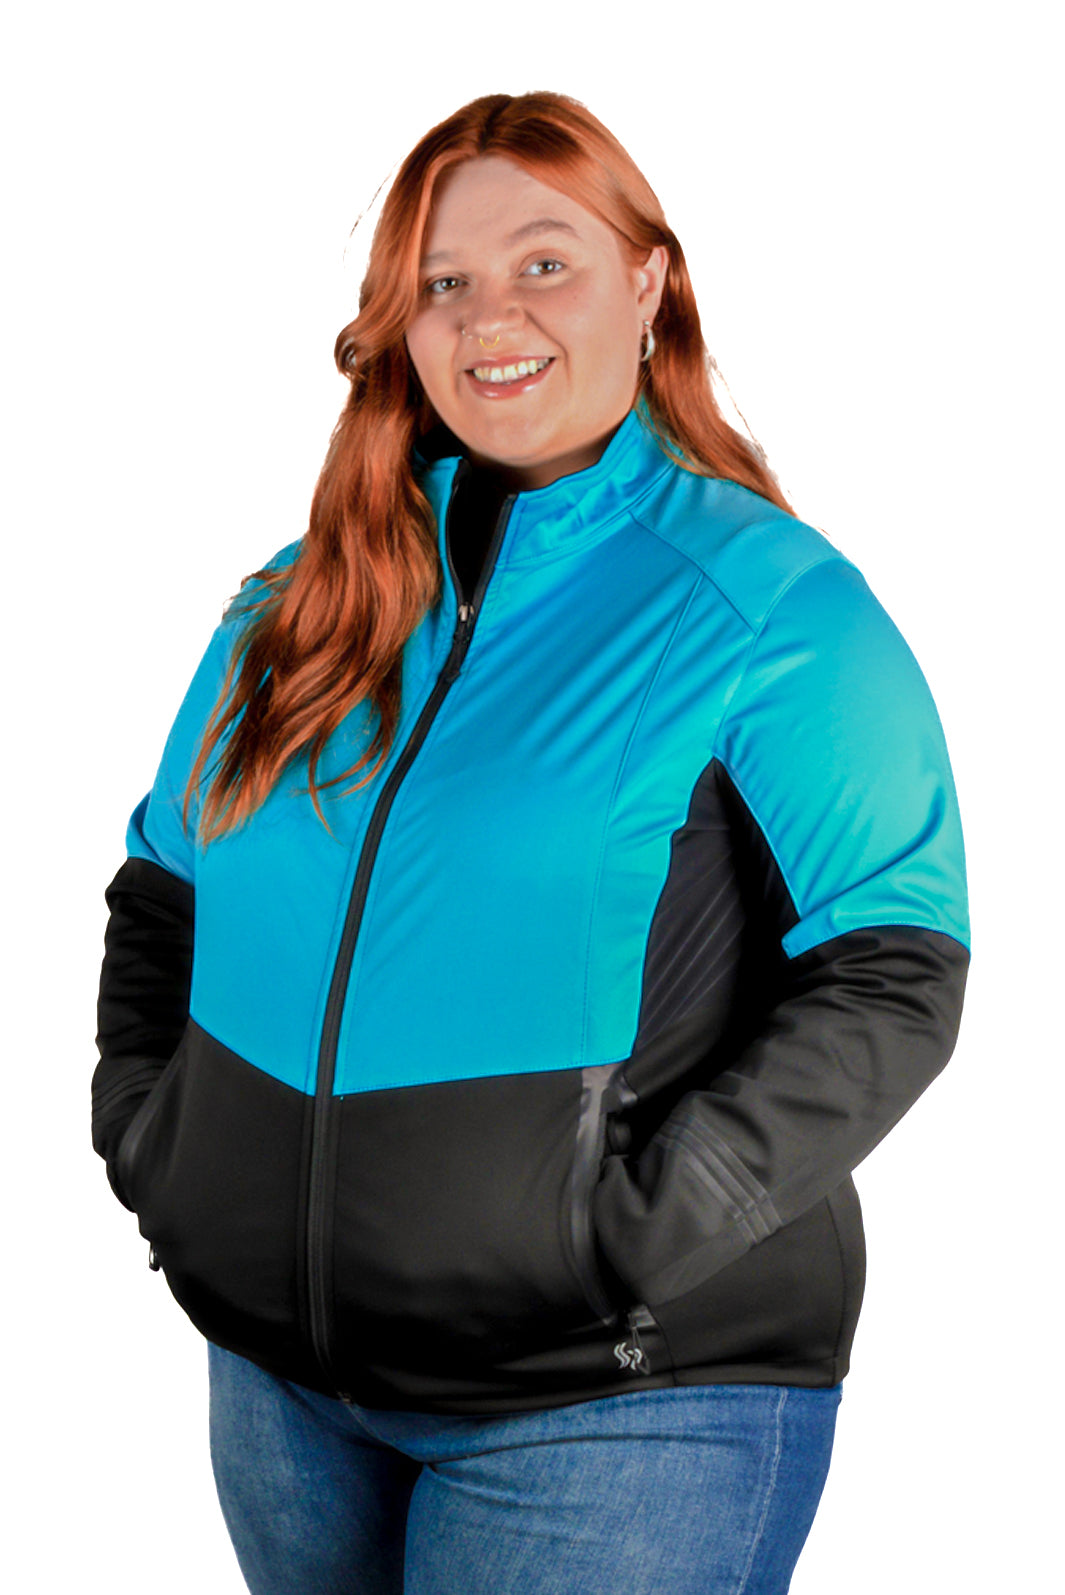 Plus Size Davos Multi-Sport Softshell Jacket by Sportive Plus